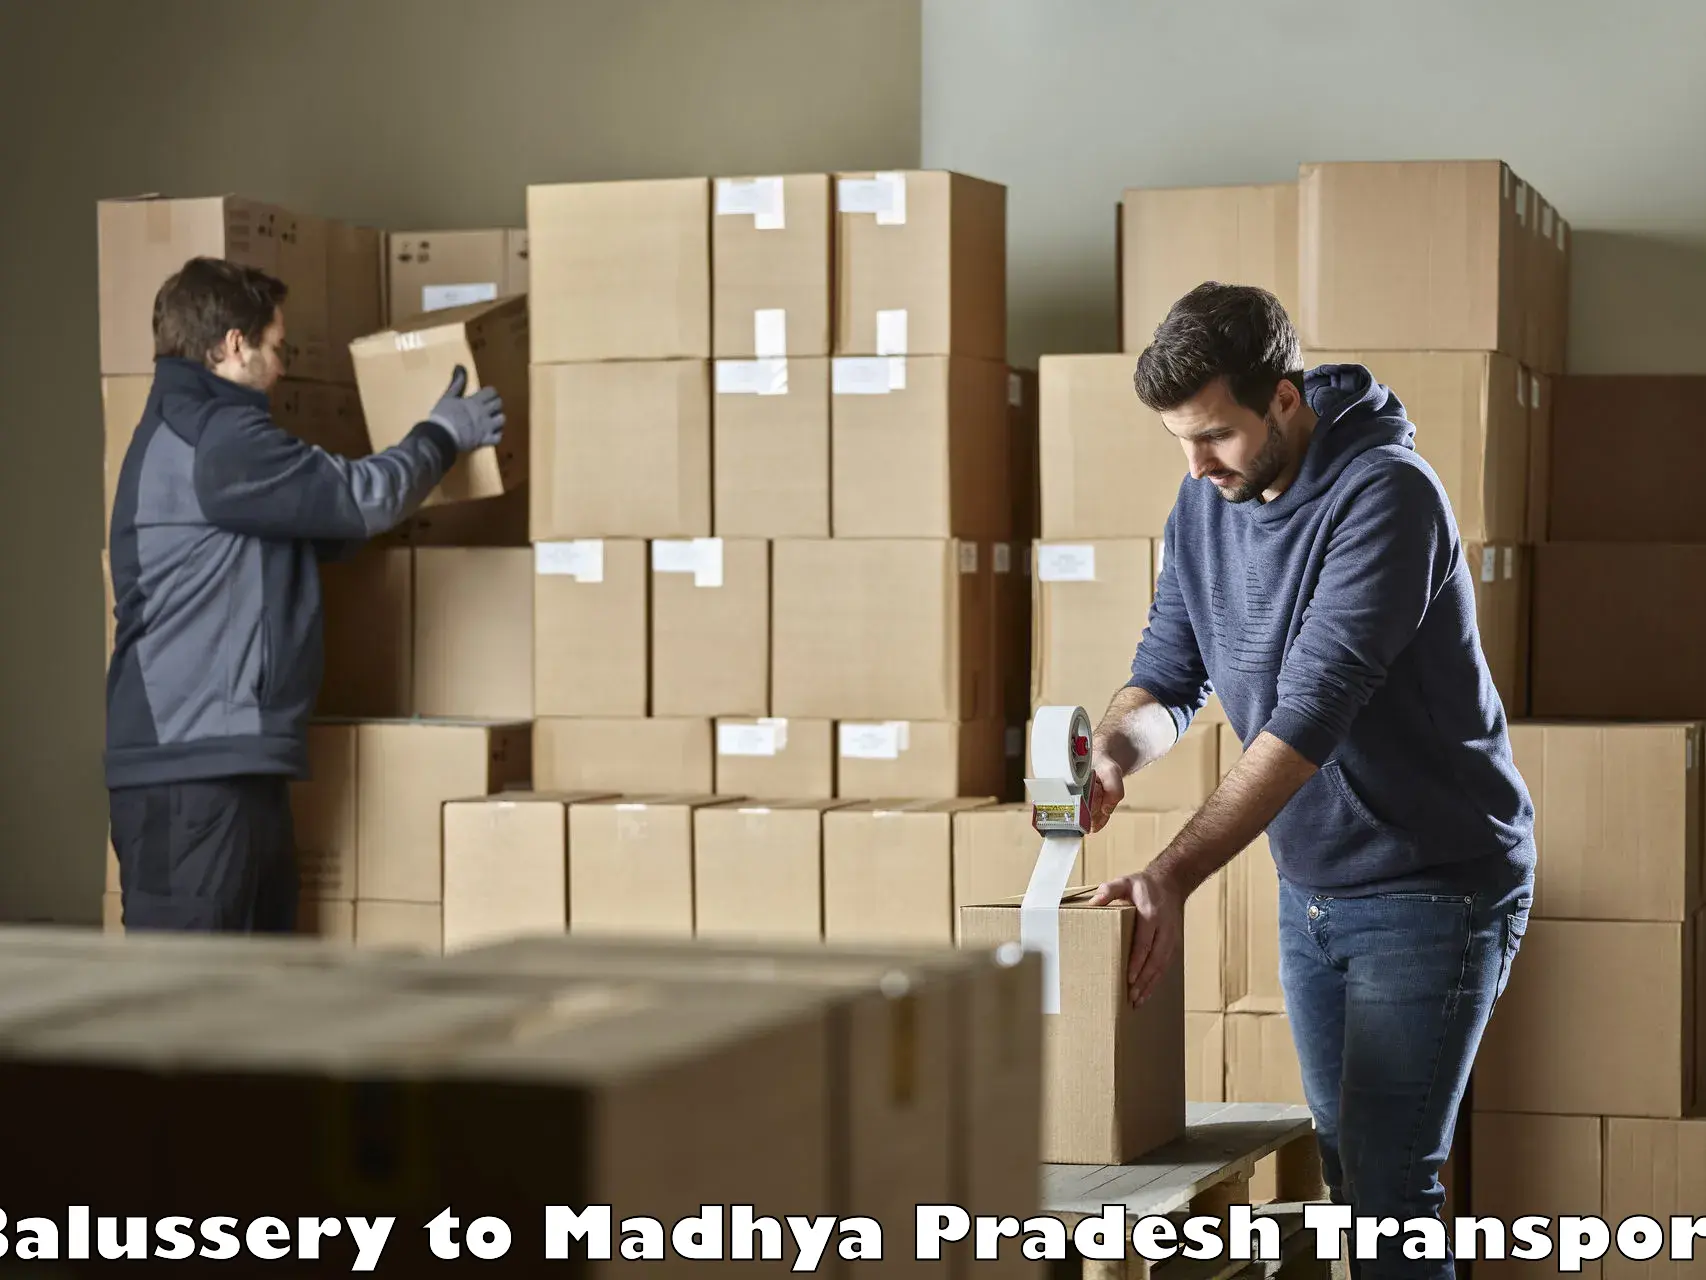 Furniture transport service Balussery to Semariya